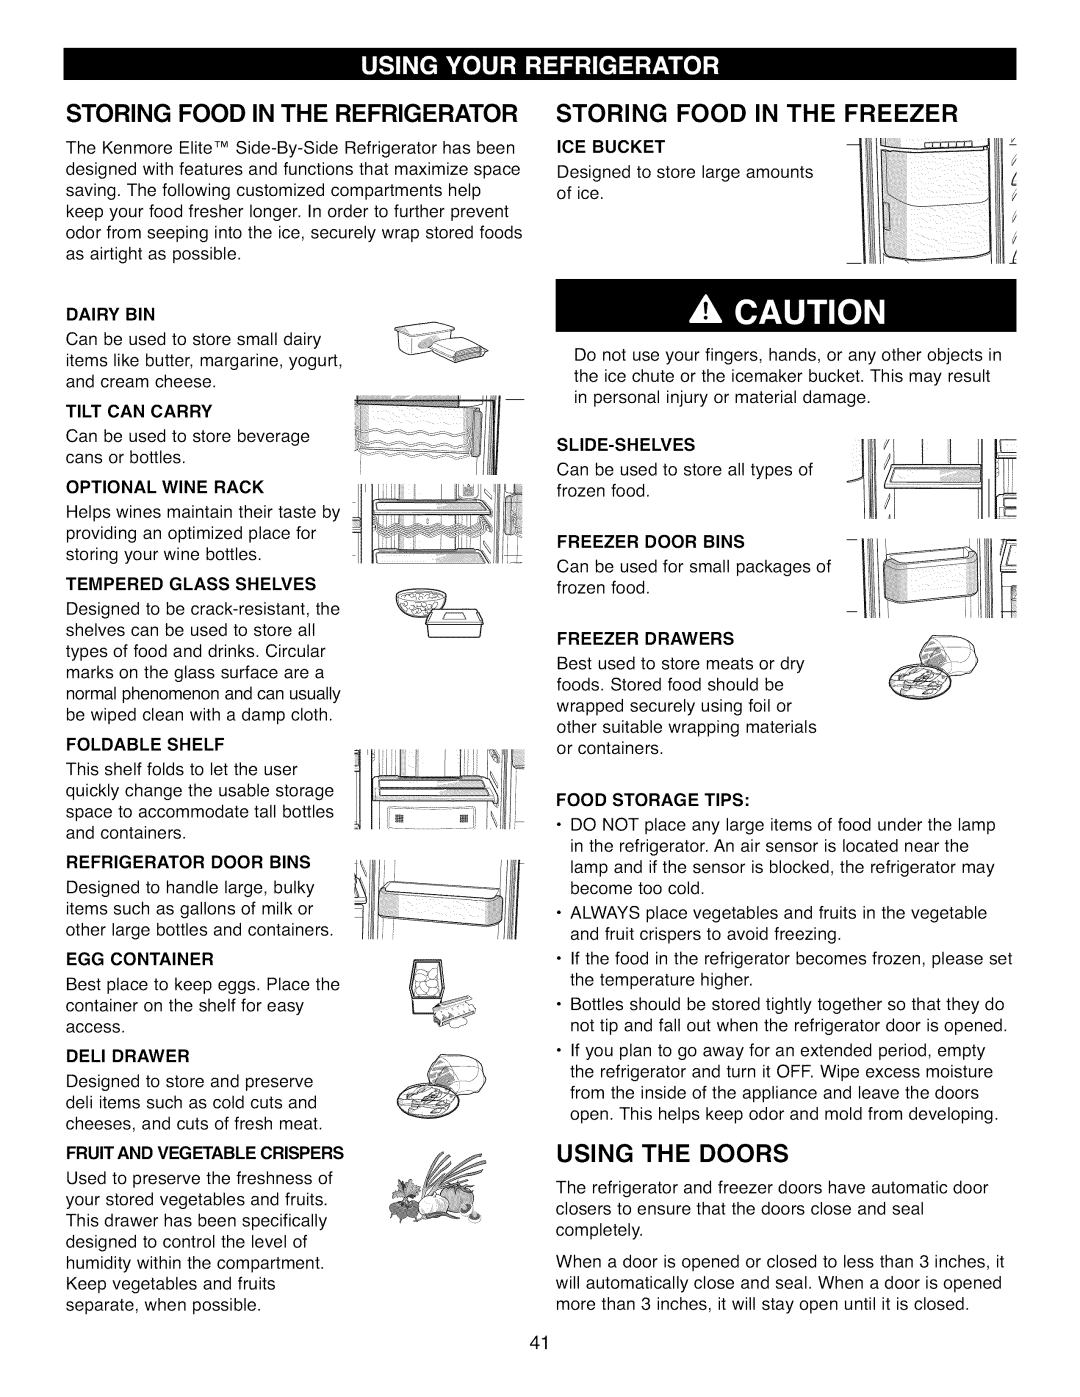 Kenmore 41009, 41003, 41002 manual Storing Food In The Refrigerator, Storing Food In The Freezer, Using The Doors 